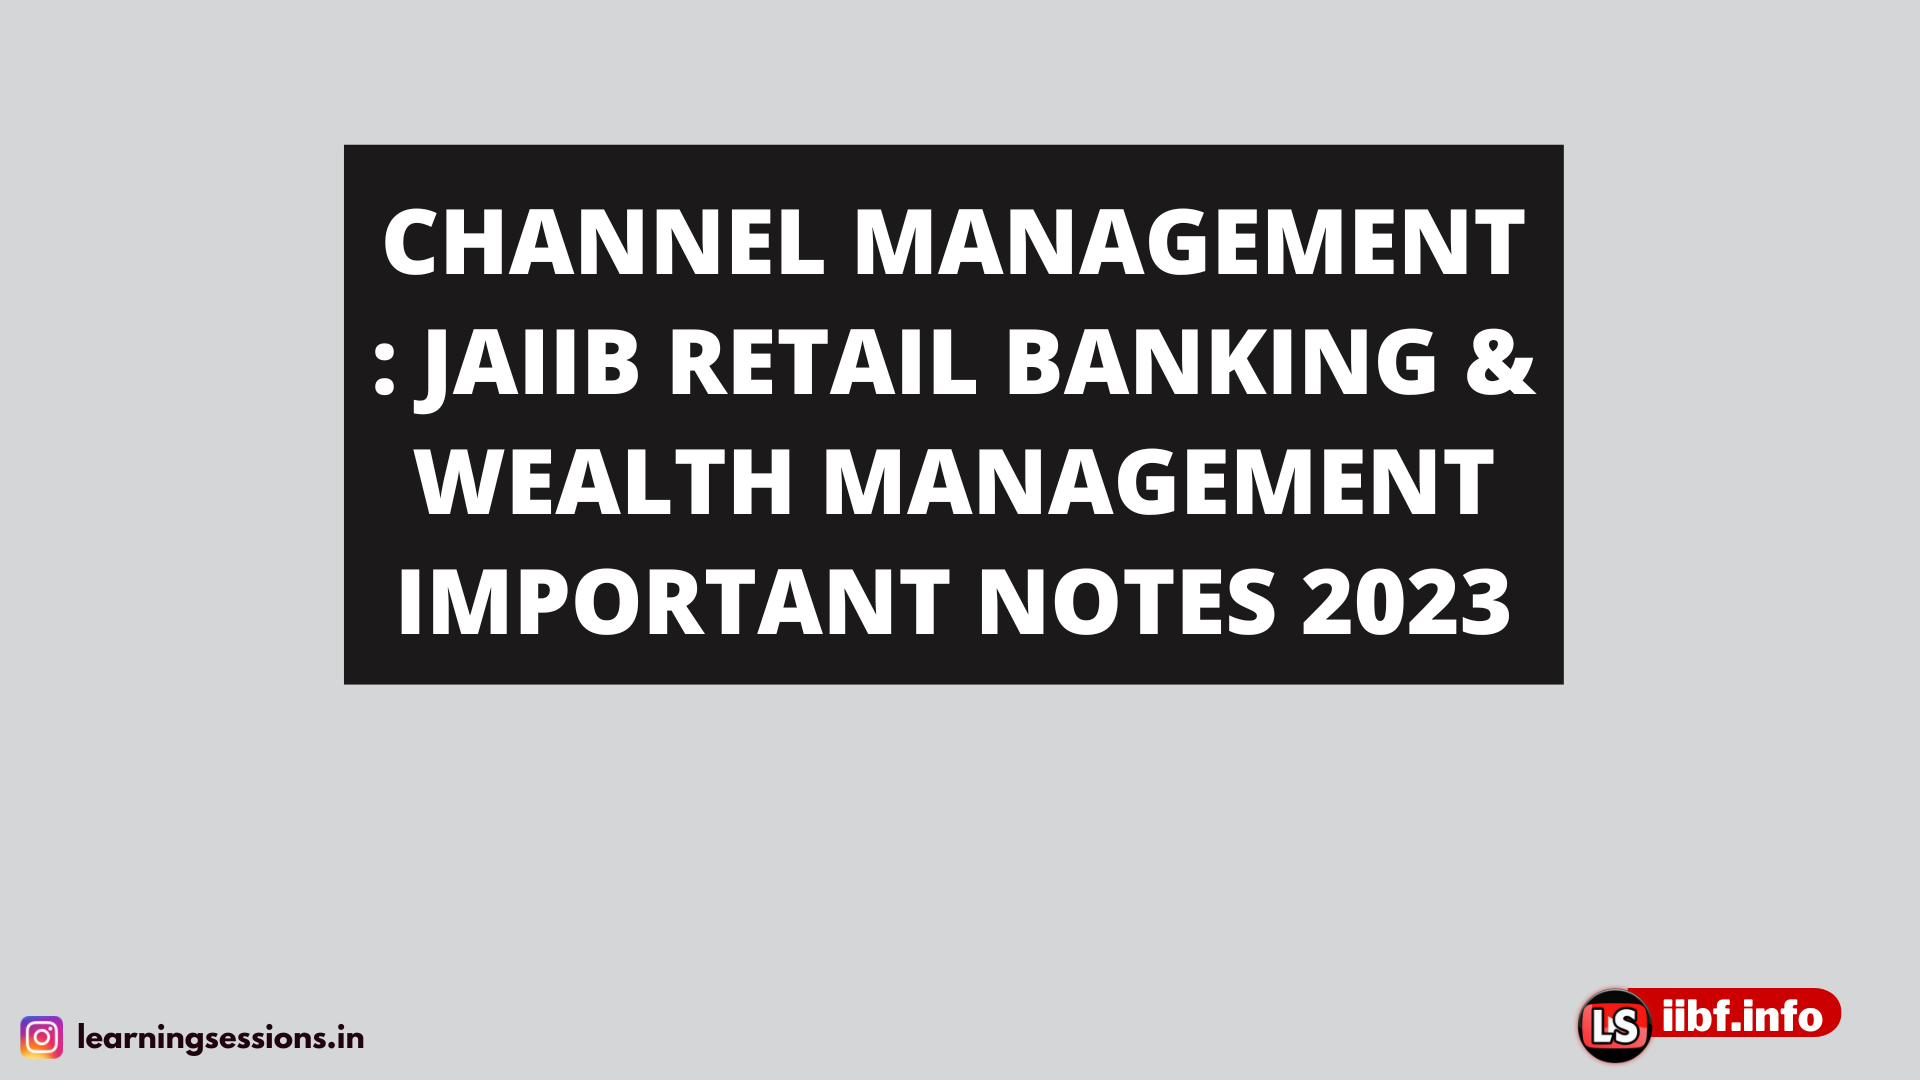 CHANNEL MANAGEMENT : JAIIB RETAIL BANKING & WEALTH MANAGEMENT IMPORTANT NOTES 2023